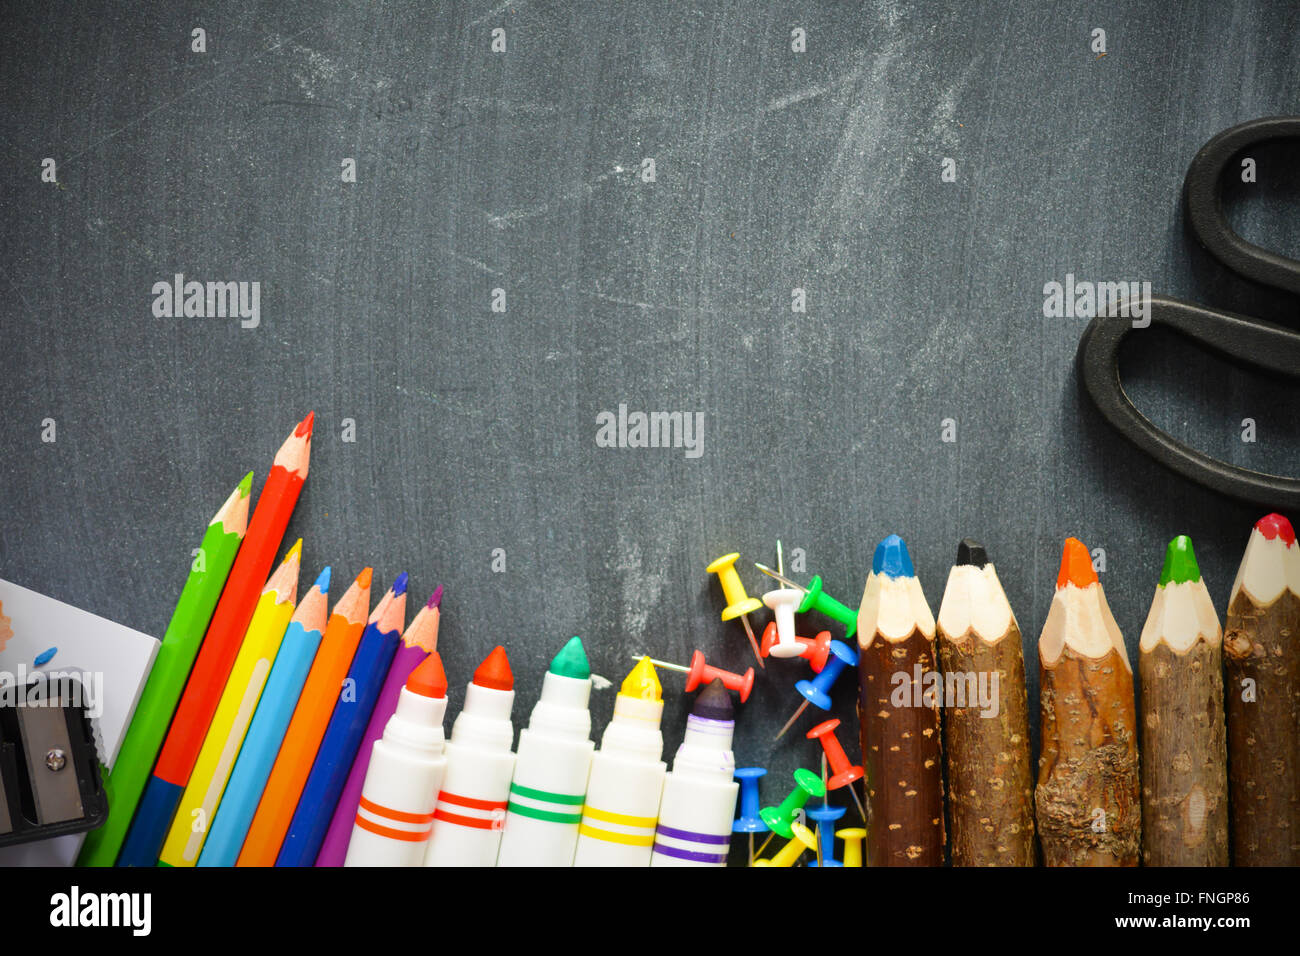 Blackboard background with school supplies suggesting back to school season Stock Photo